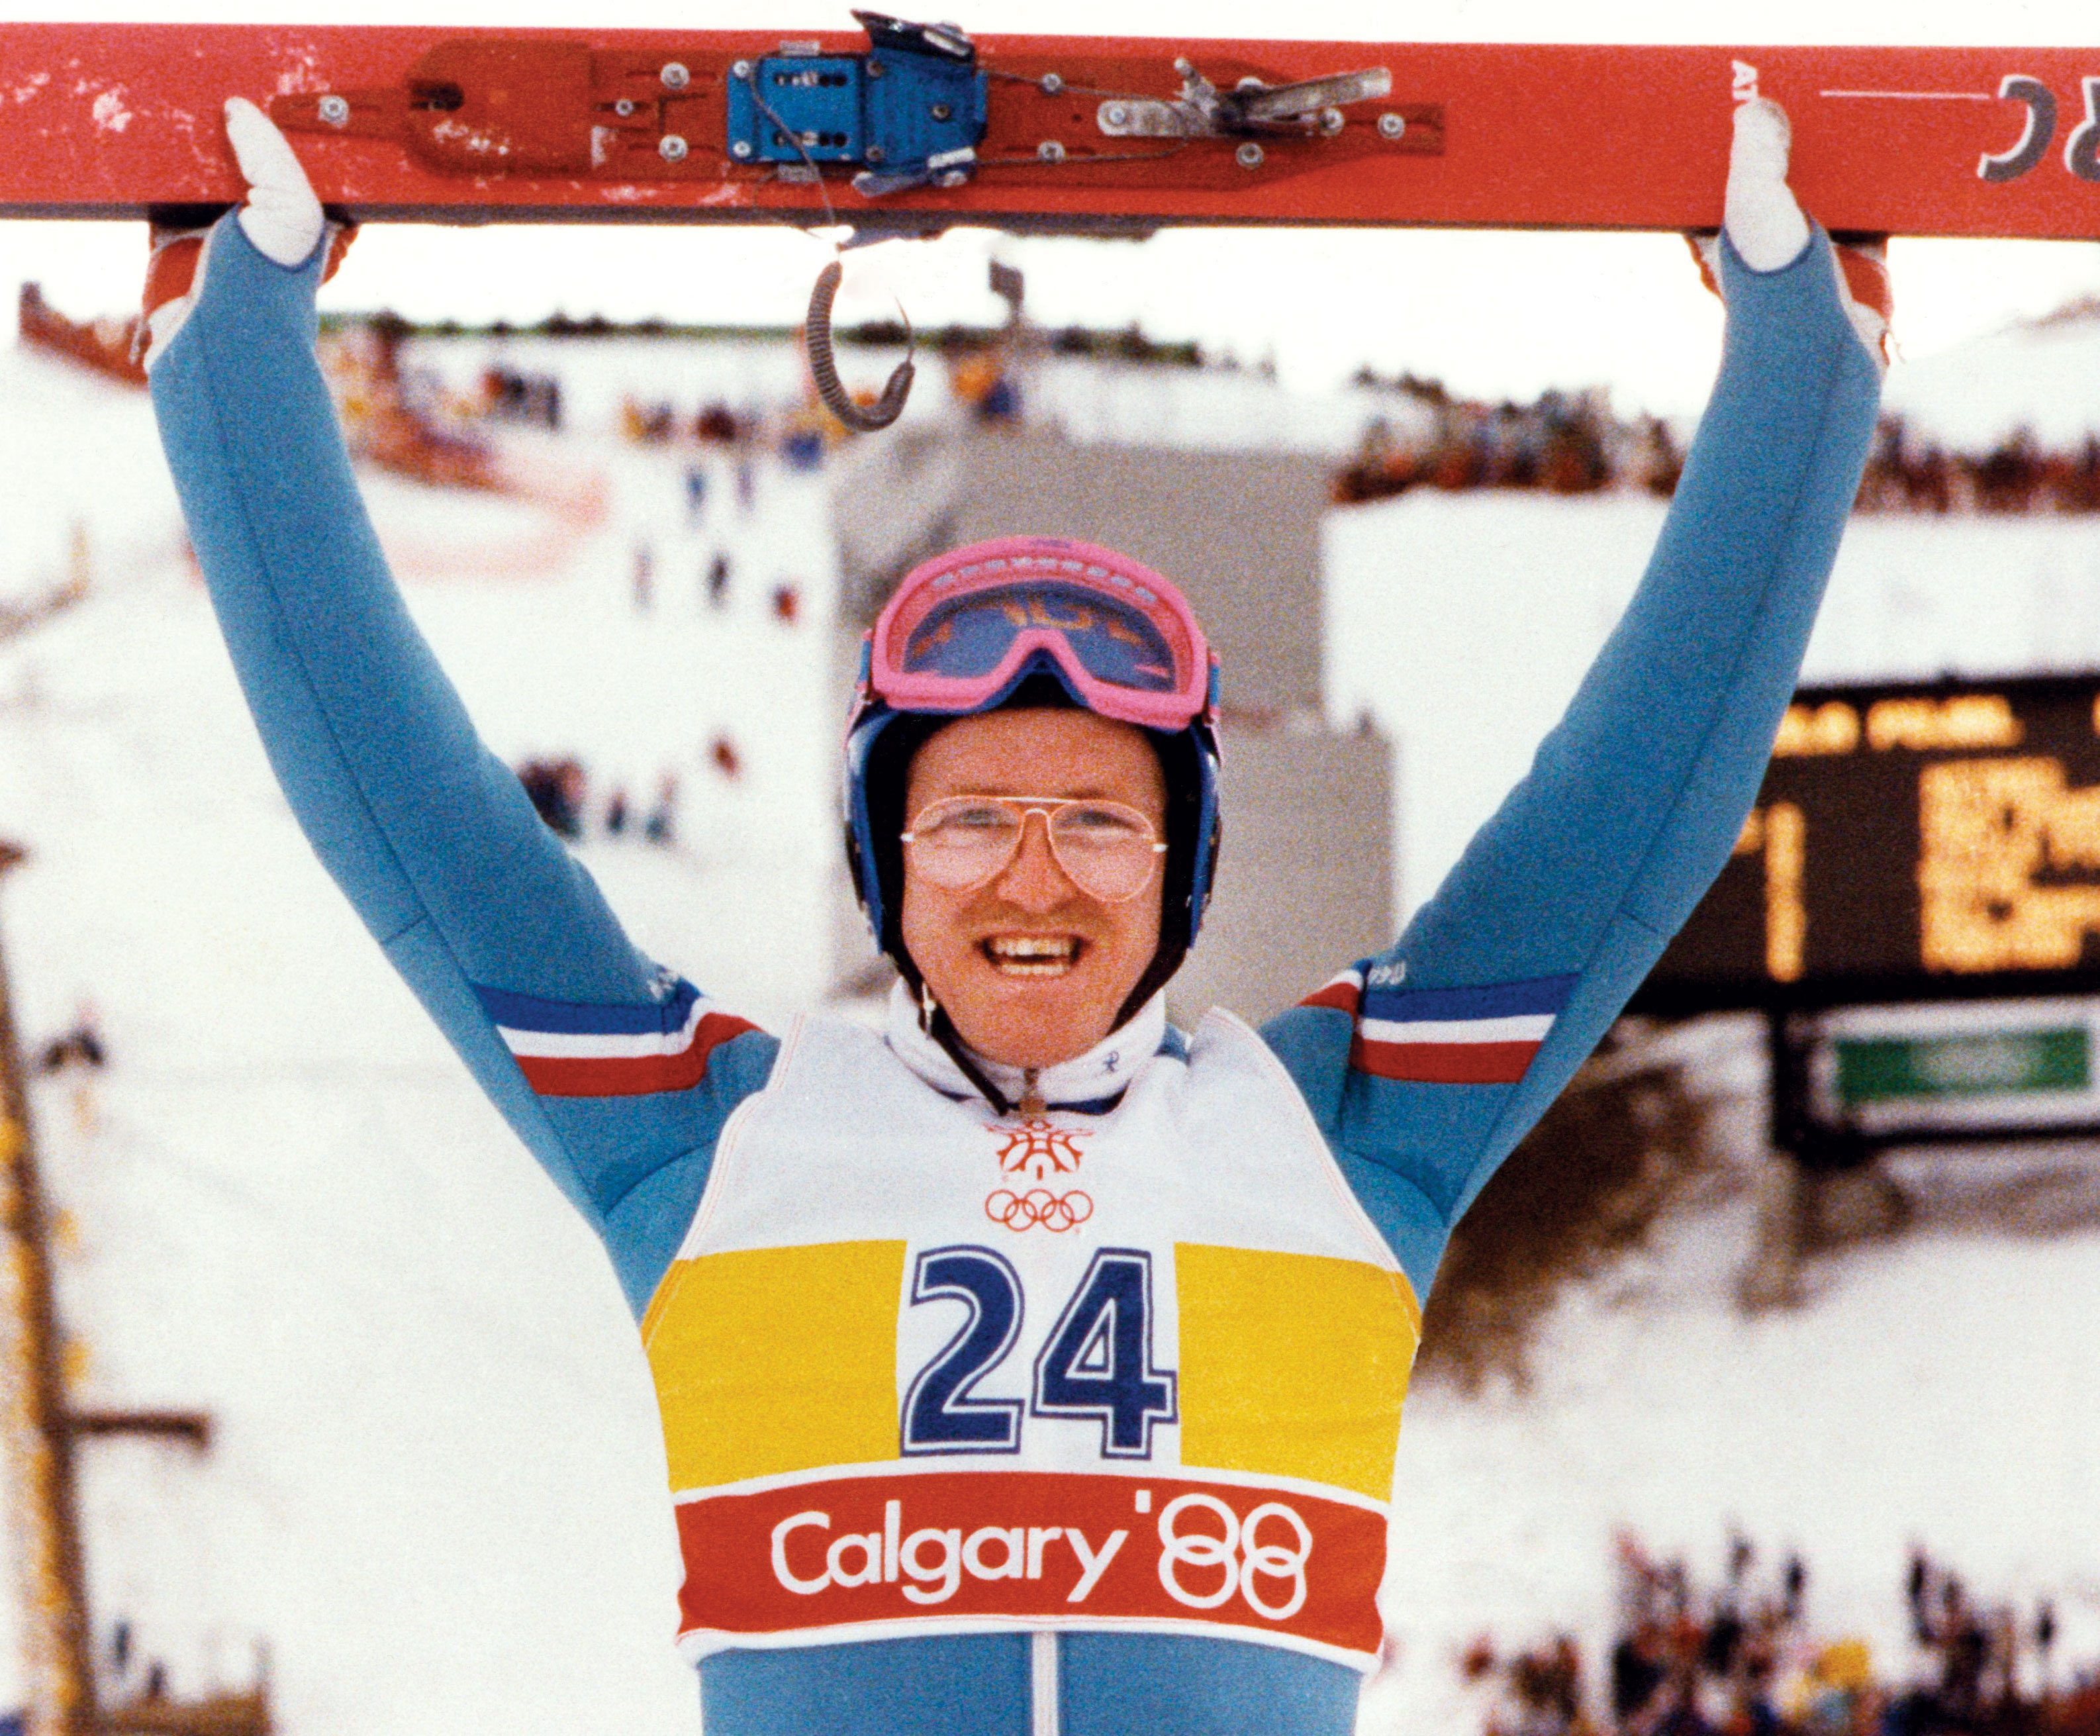 Eddie-the-Eagle-Calgary-1988.jpg